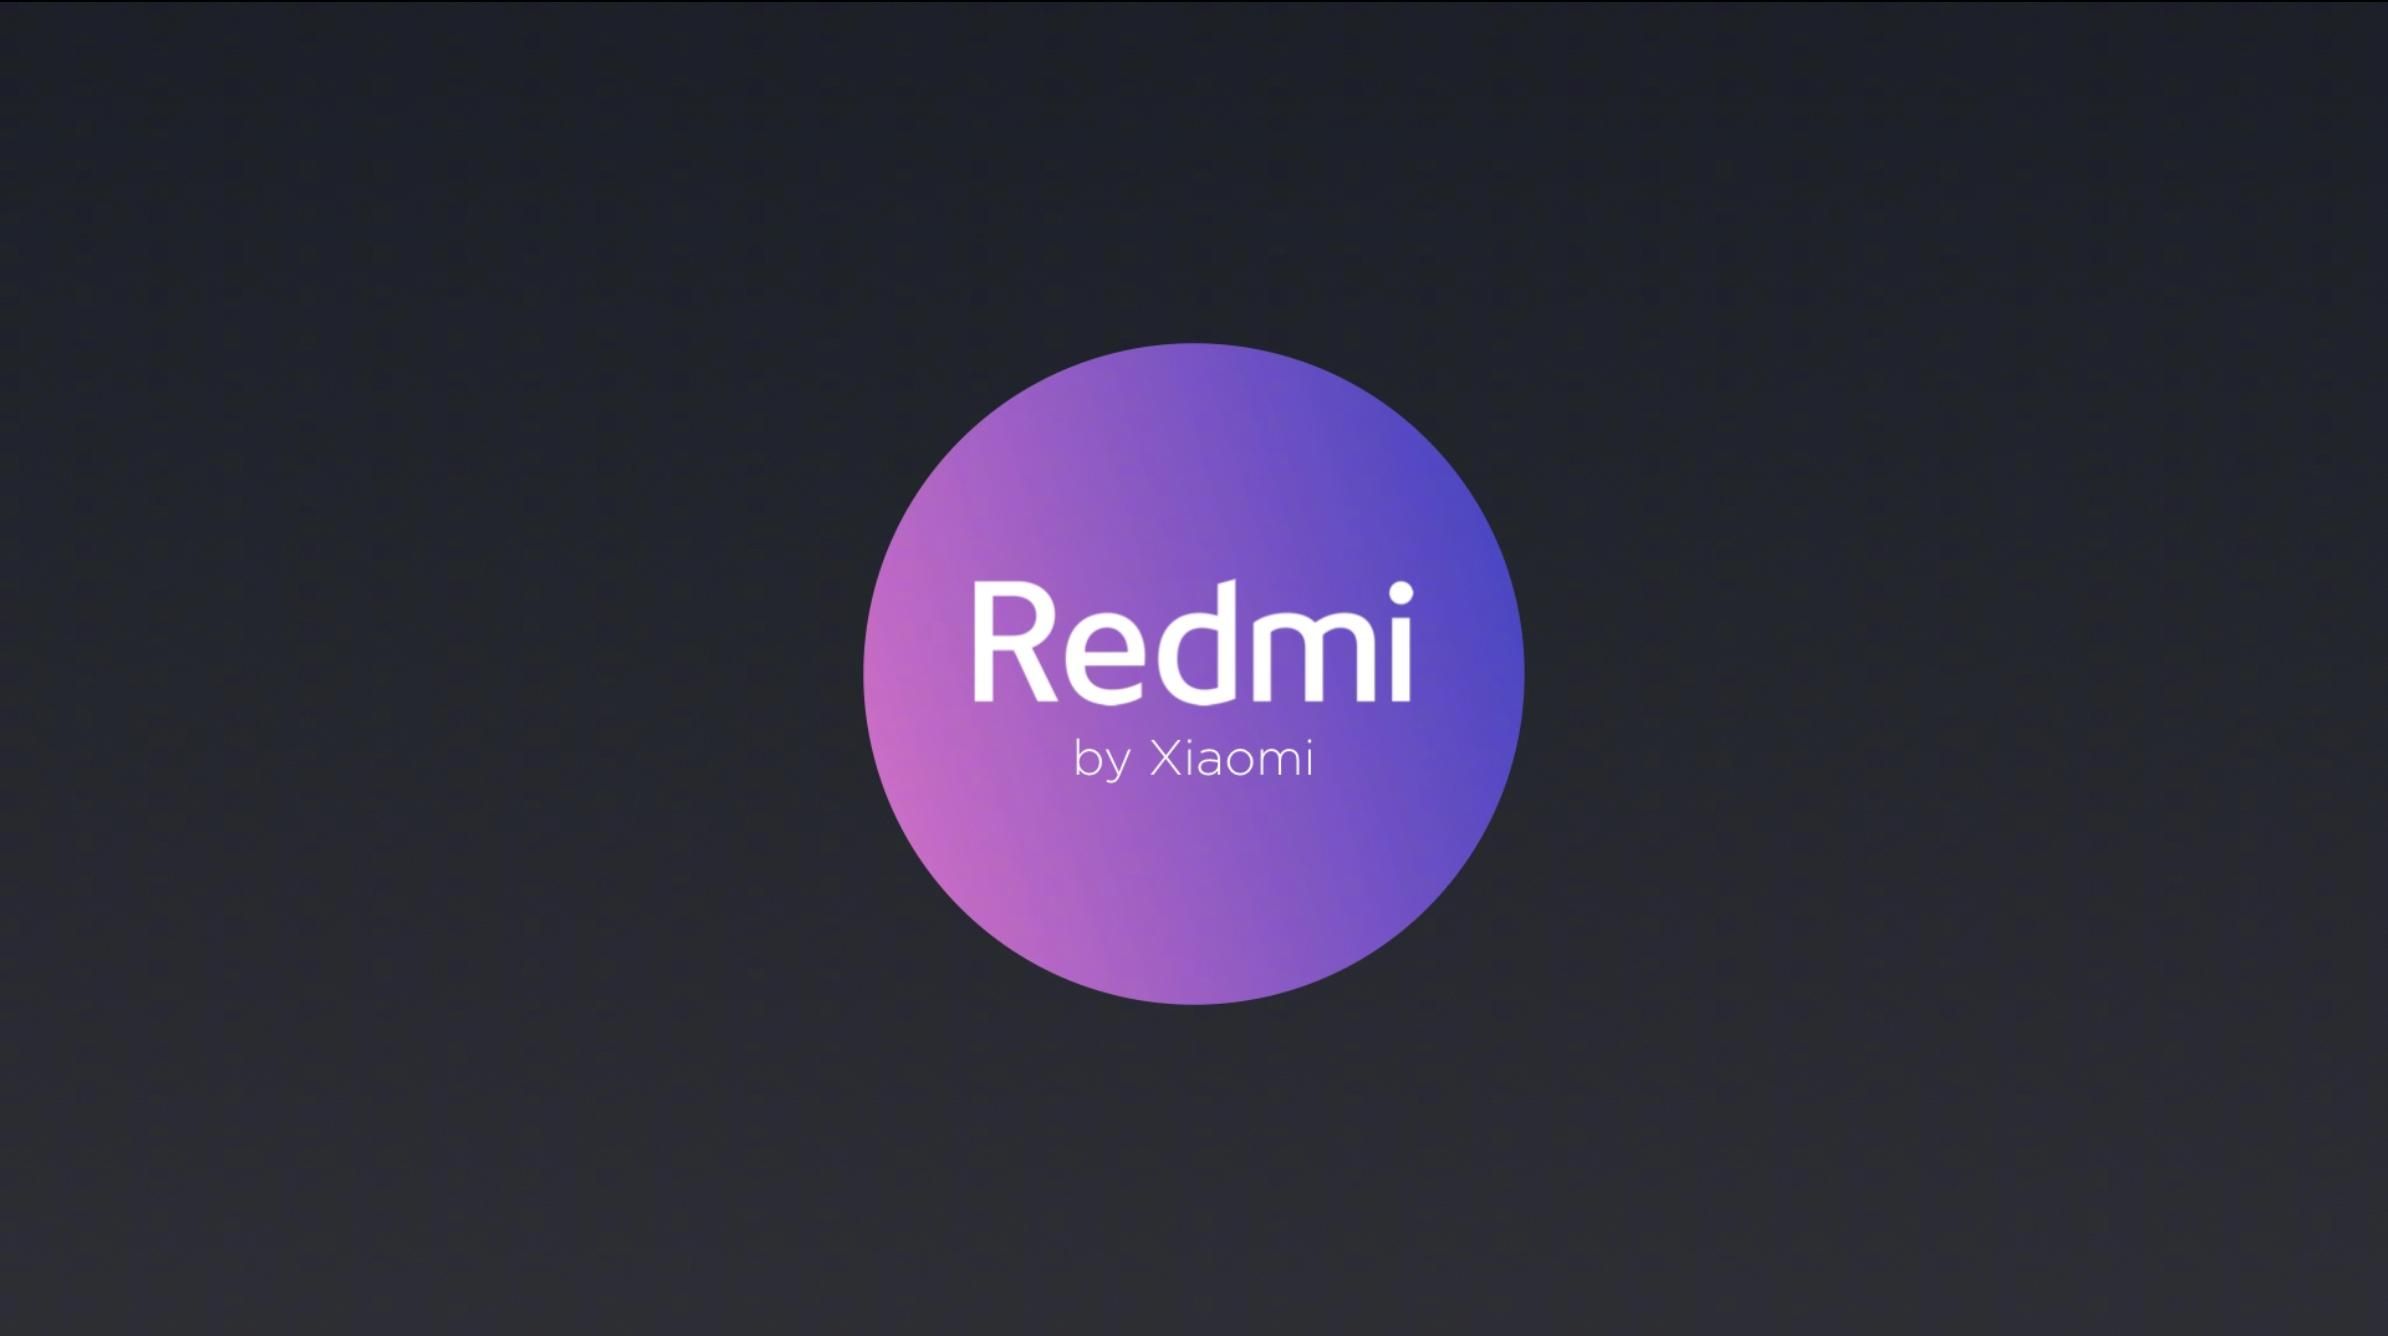 В Сети опубликовали первое фото флагманского смартфона Redmi Pro 2: детали